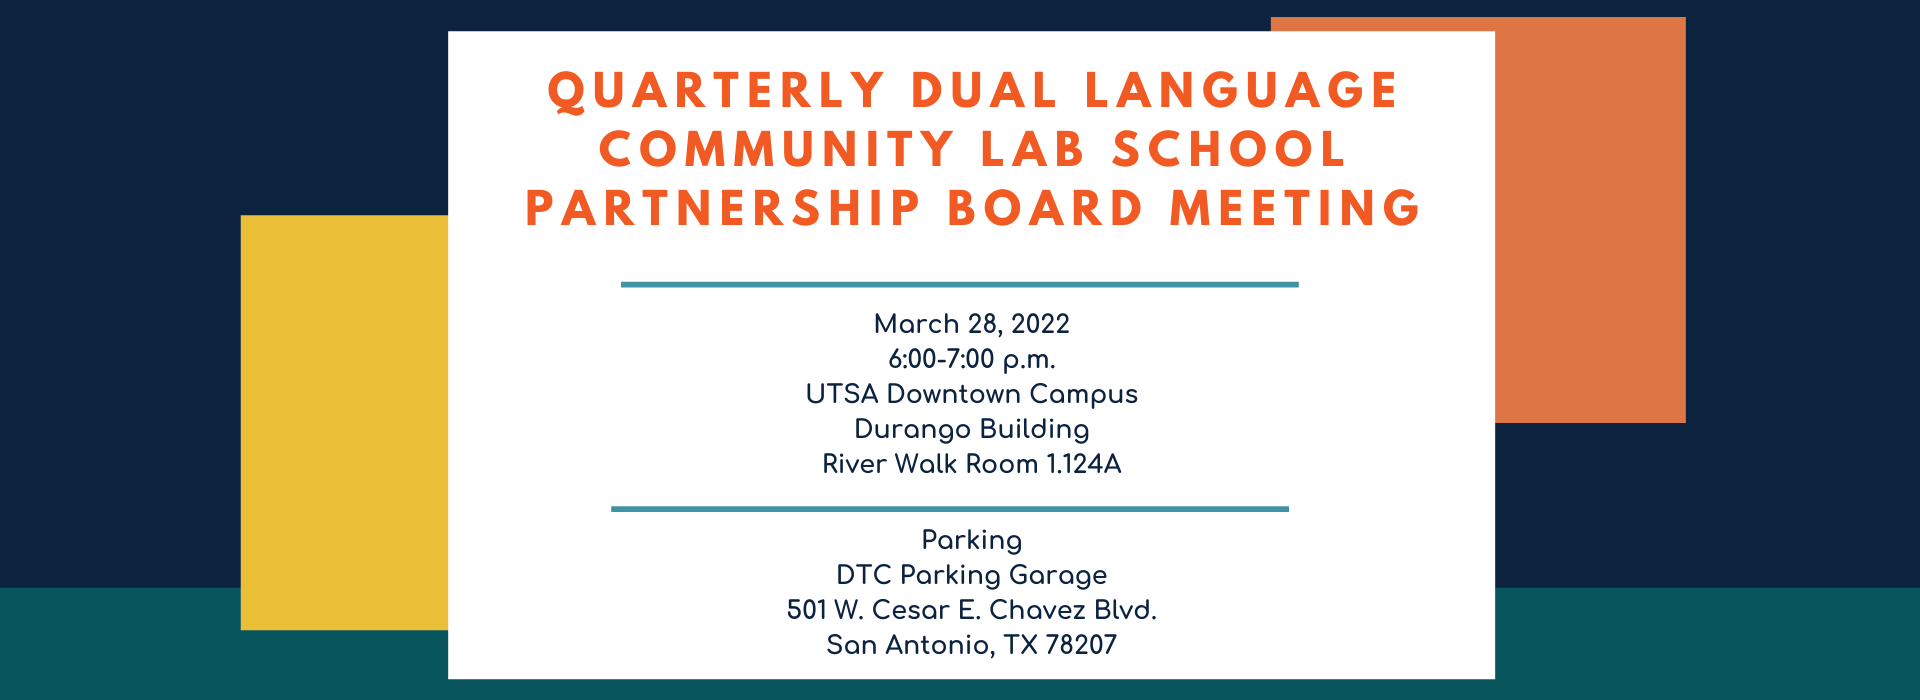 Quarterly Dual Language Community Lab School Partnership Board Meeting